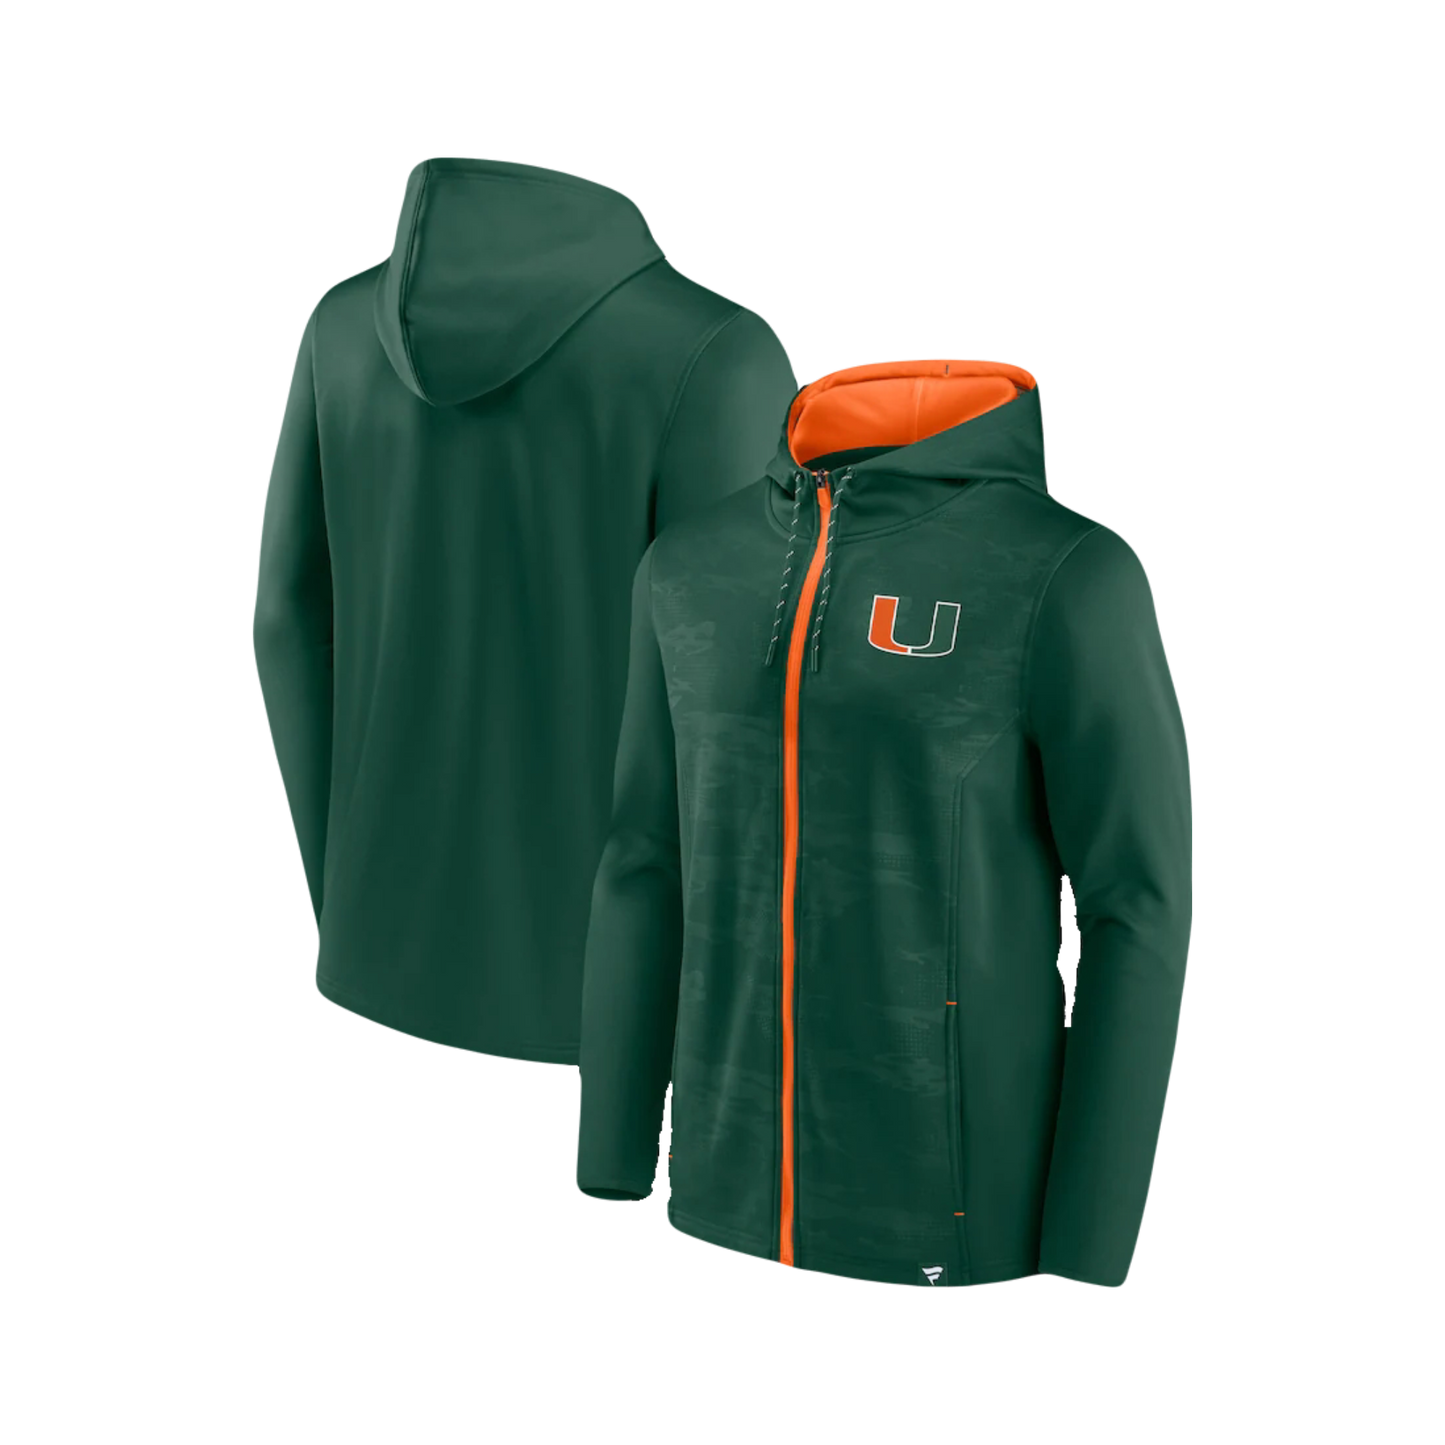 Miami Hurricanes NCAA Nike Dri-FIT Athletic Performance Graphic Hoodie Jacket